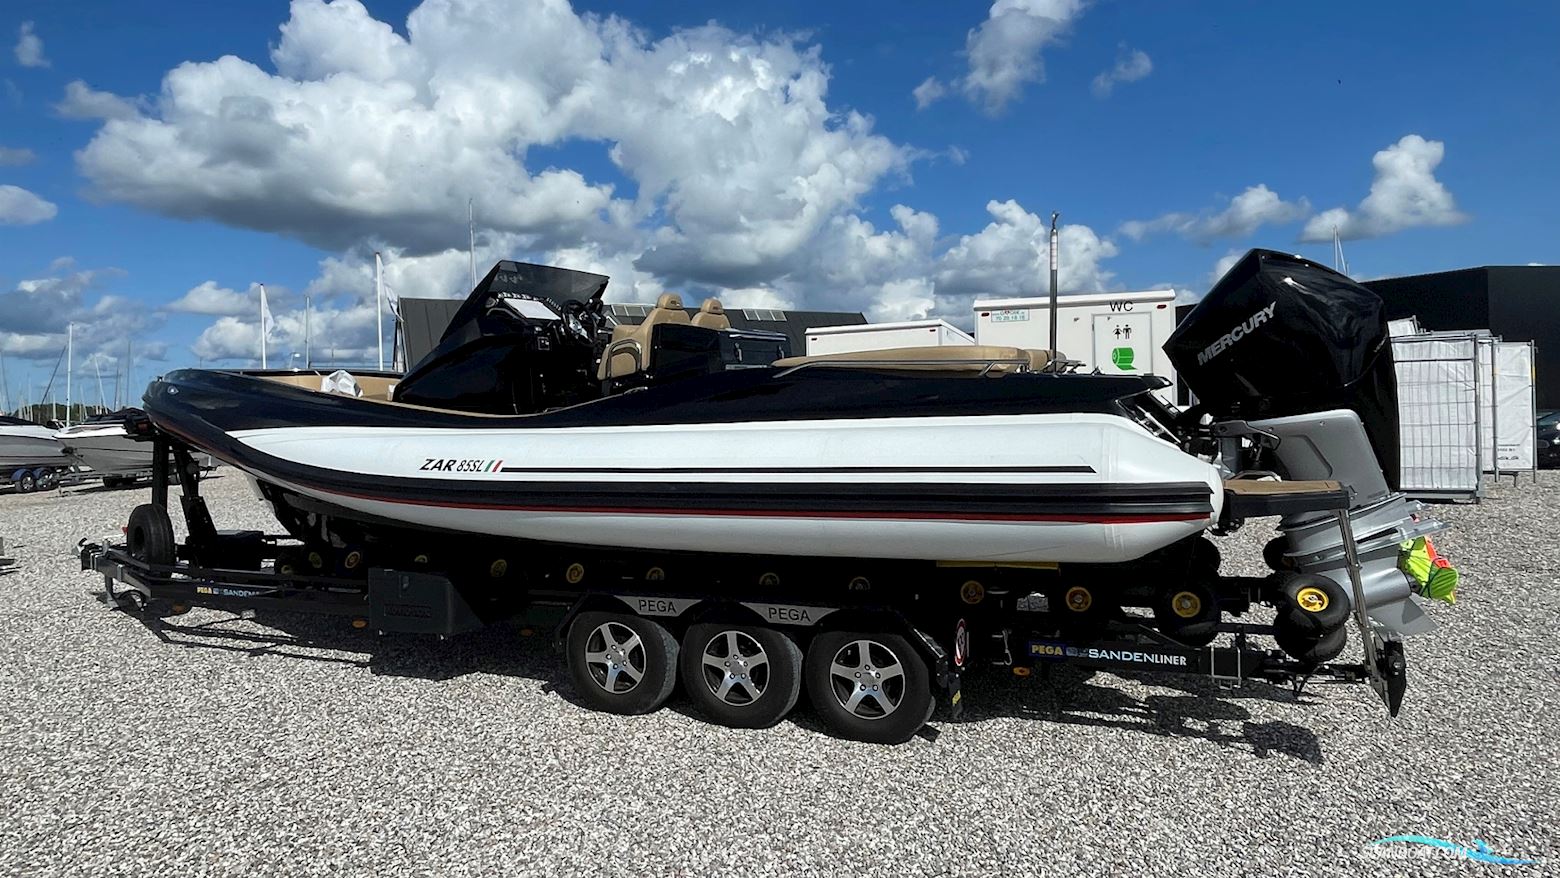 Zar Formenti 85SL Motorboot 2021, mit Mercrury motor, Dänemark